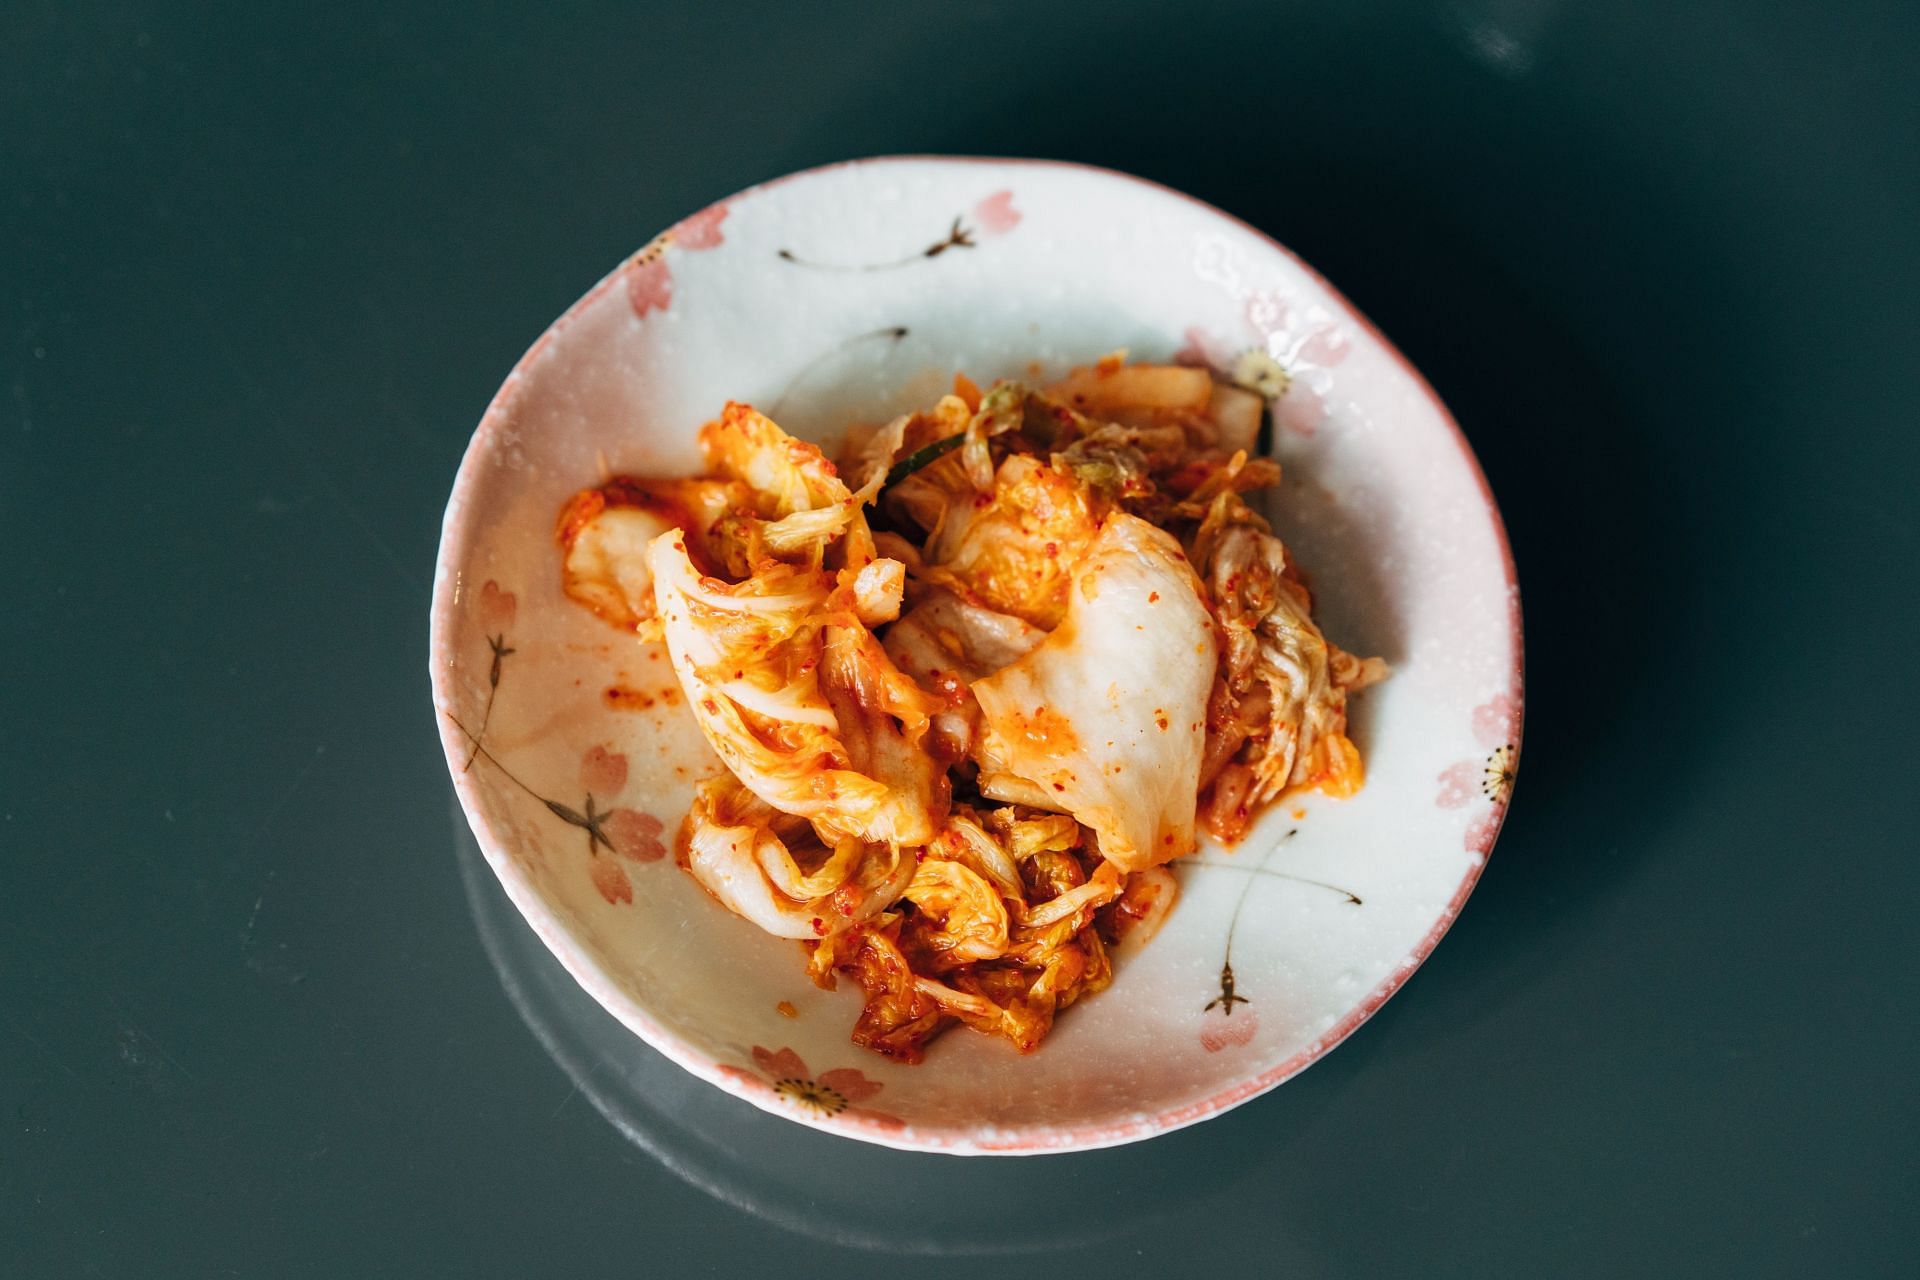 adding kimchi to the diet can improve your digestion. (image via unsplash / markus winkler)